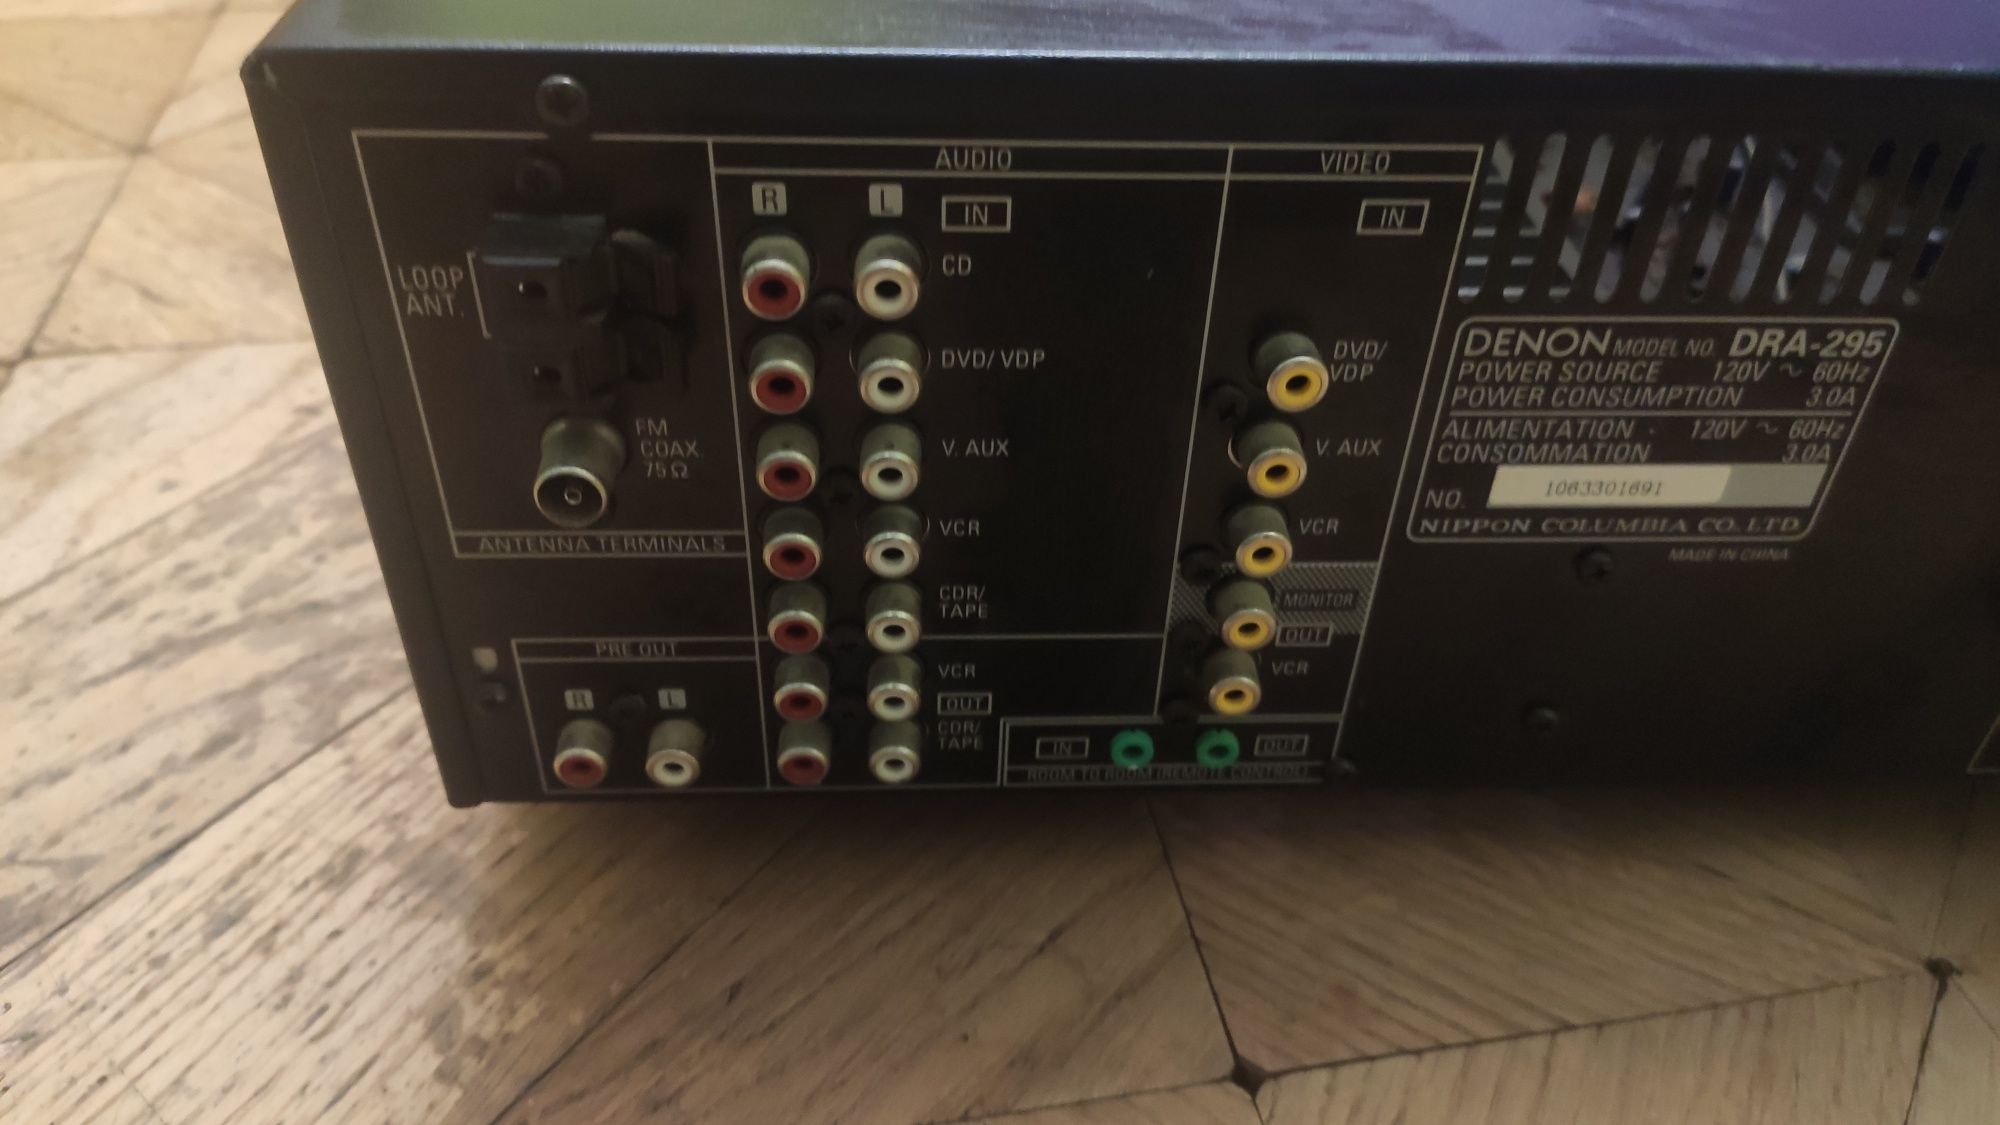 Amplituner stereo denon dra-295